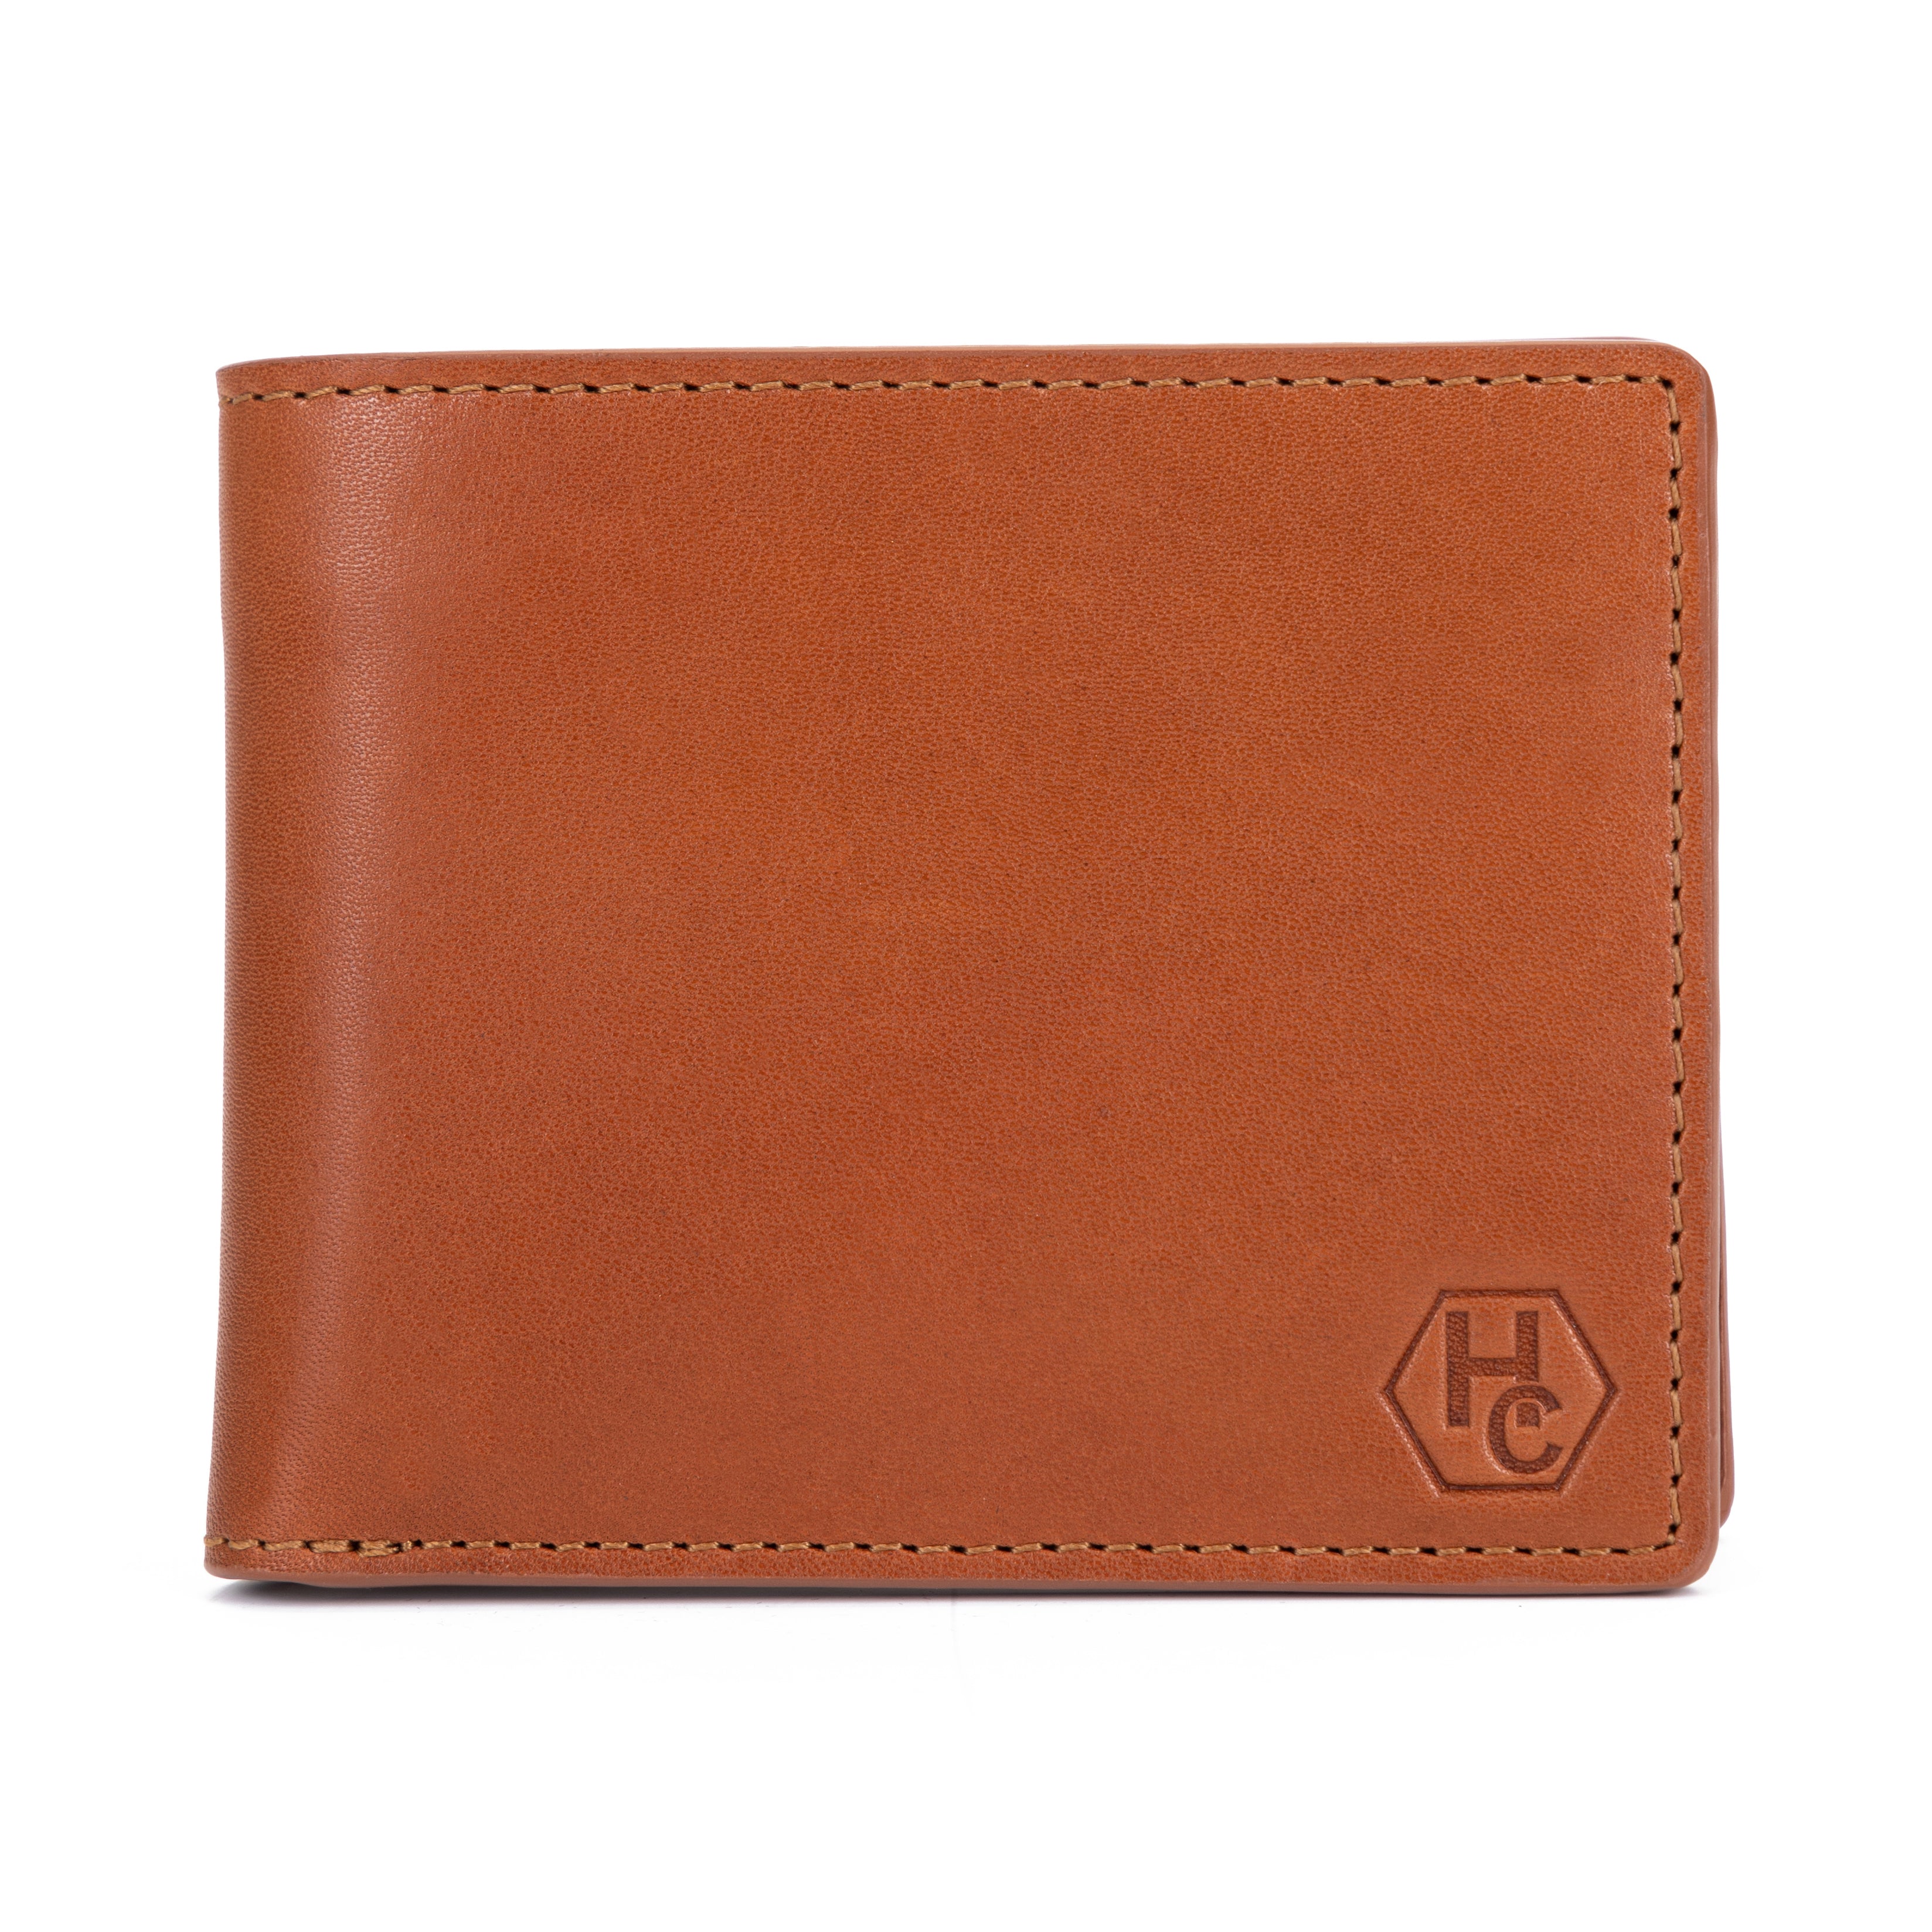 HC Classic Bifold Wallet Cognac 28490550706327